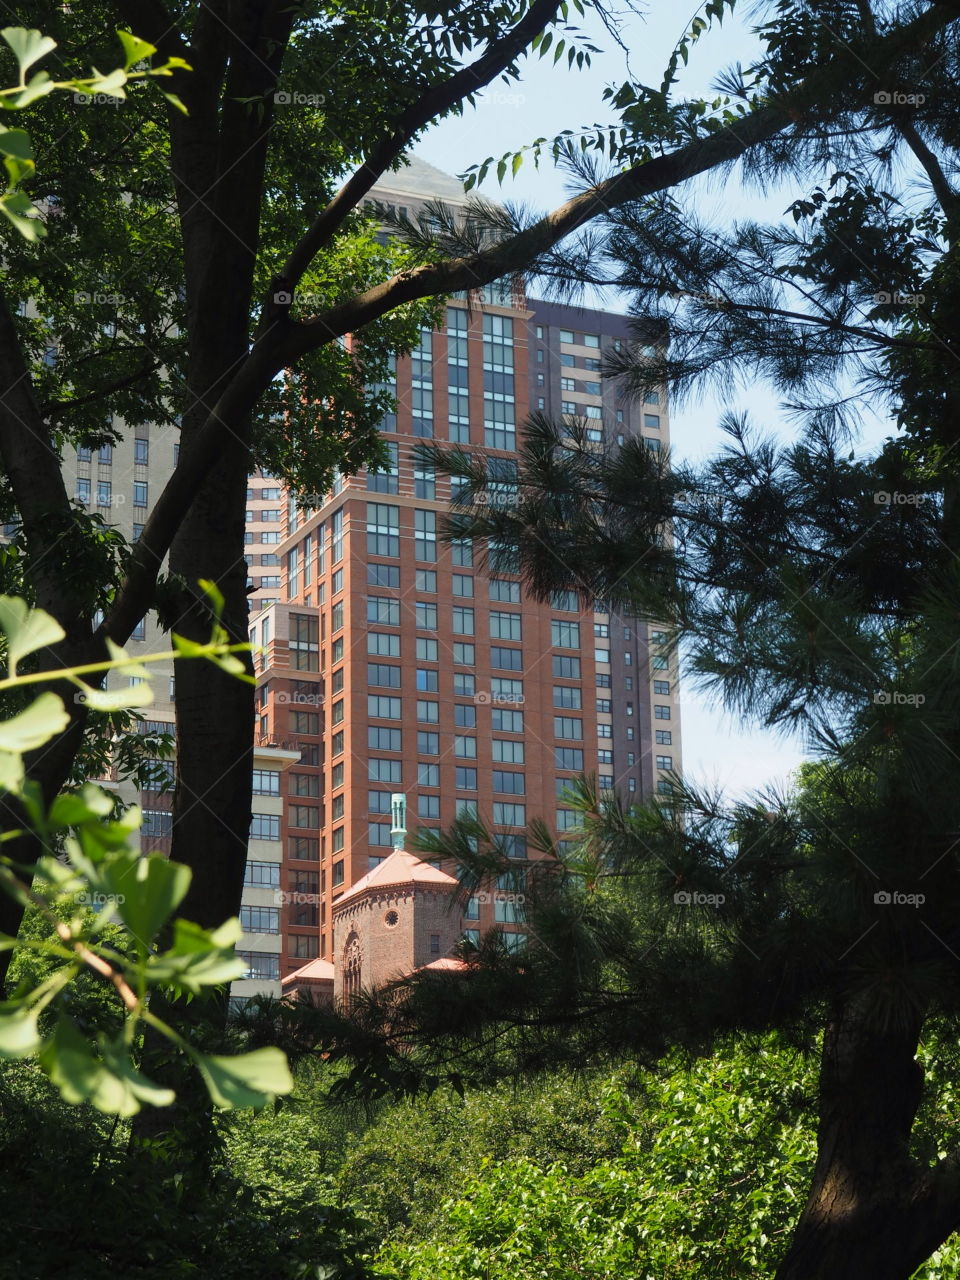 Building façade in NewYork City, seen from Central Park